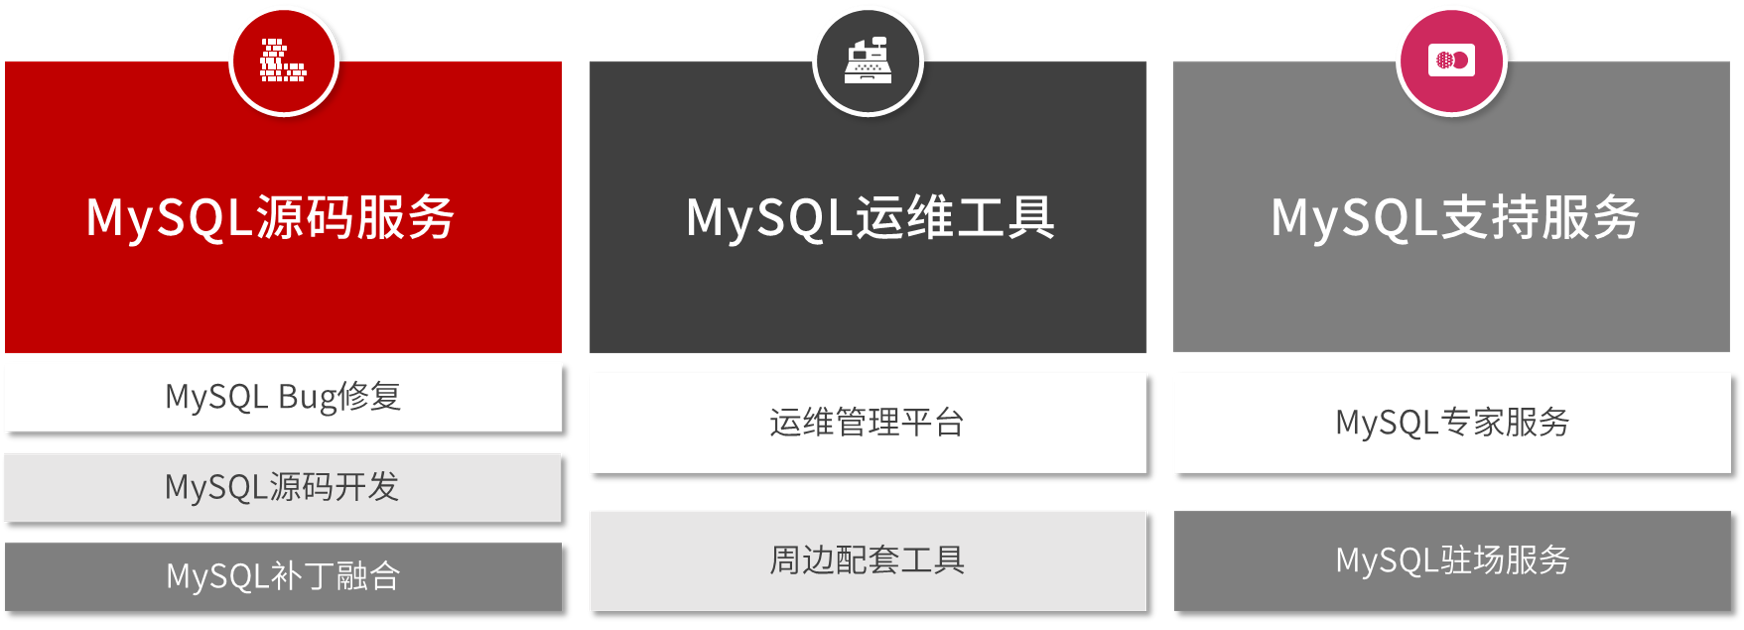 MySQL技术能力.png